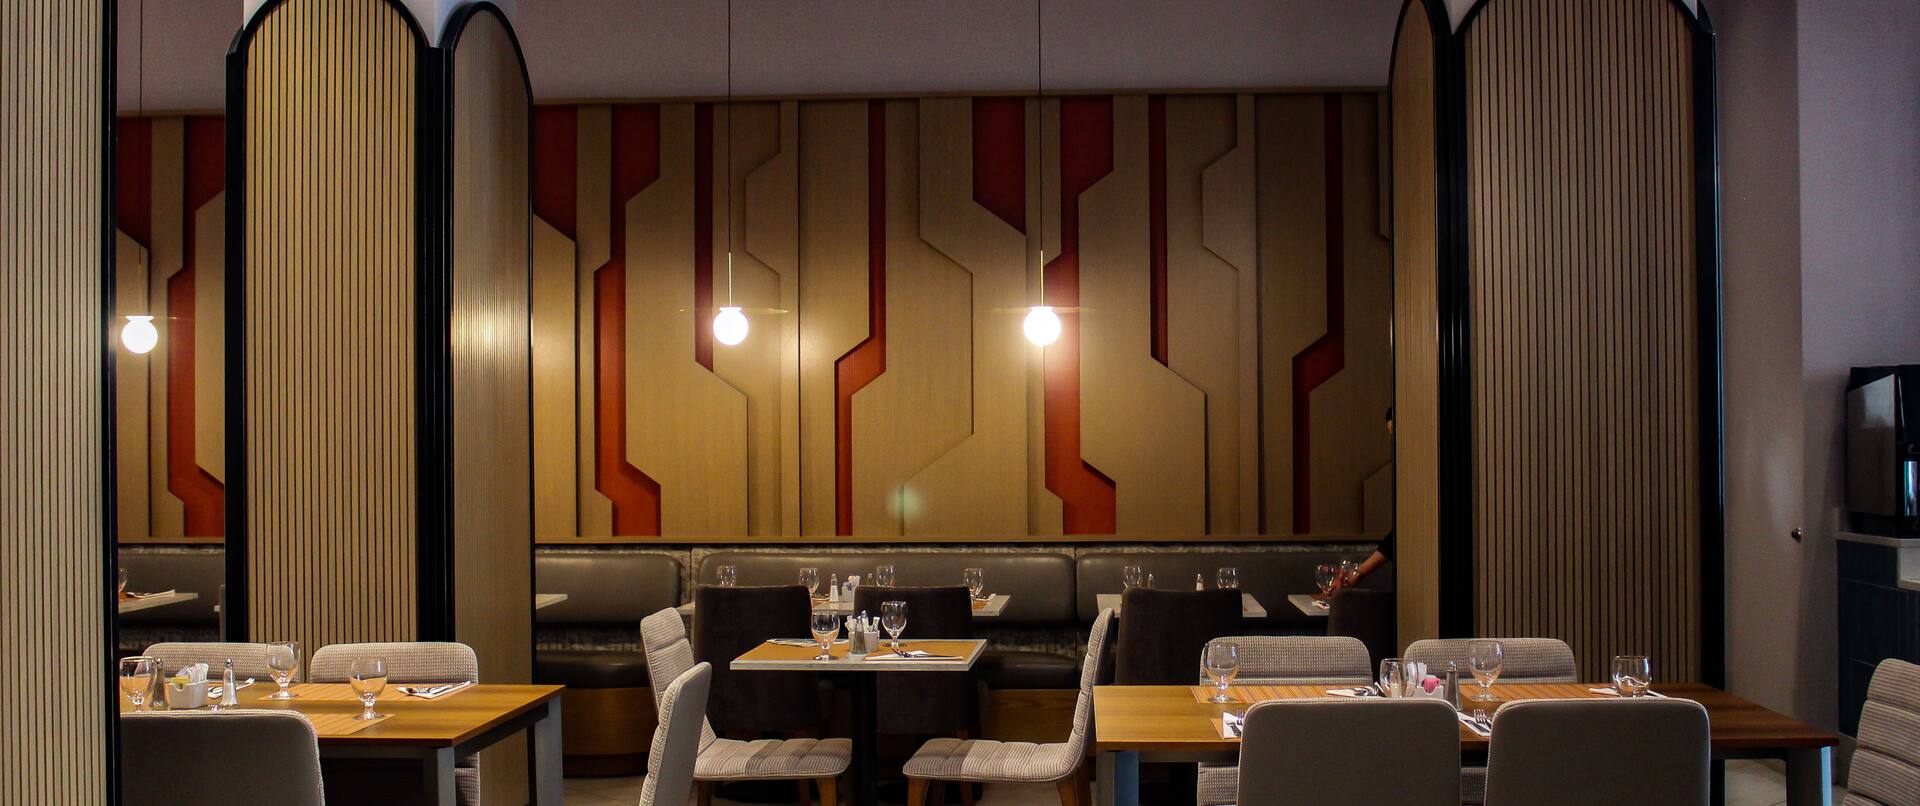 Dining Area of VUE525 Restaurant